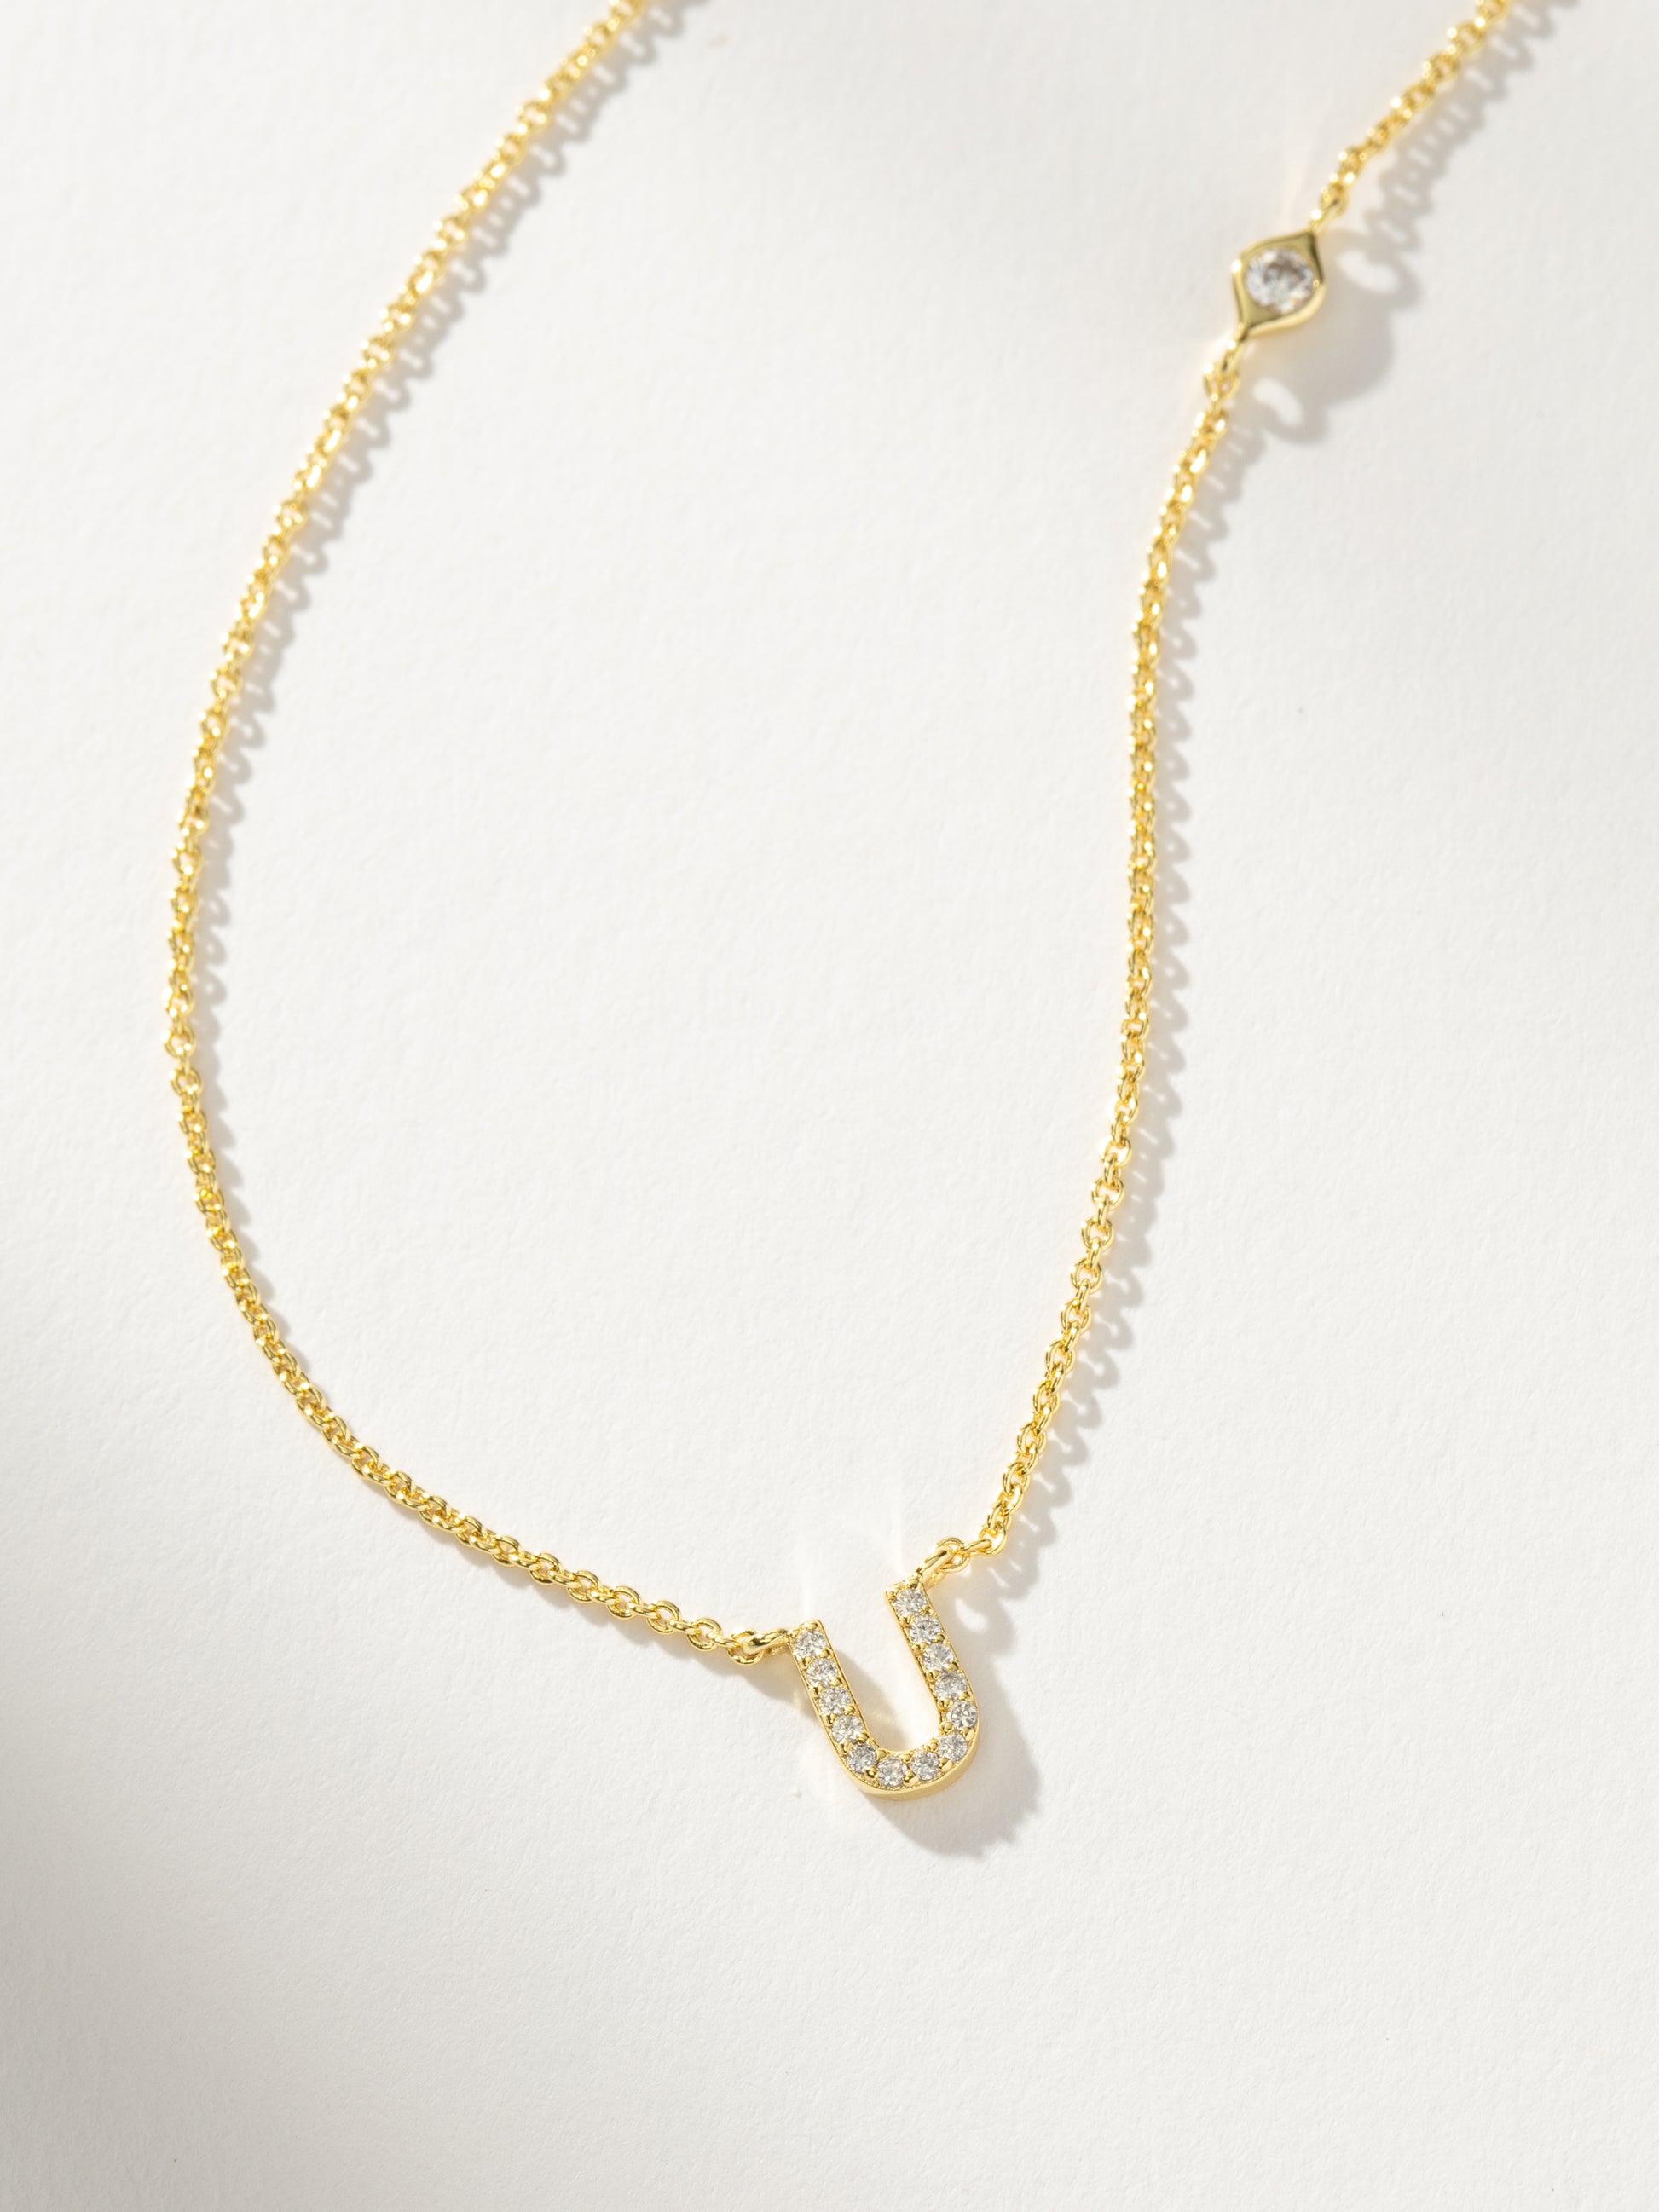 Pavé Initial Necklace | Gold U | Product Detail Image | Uncommon James